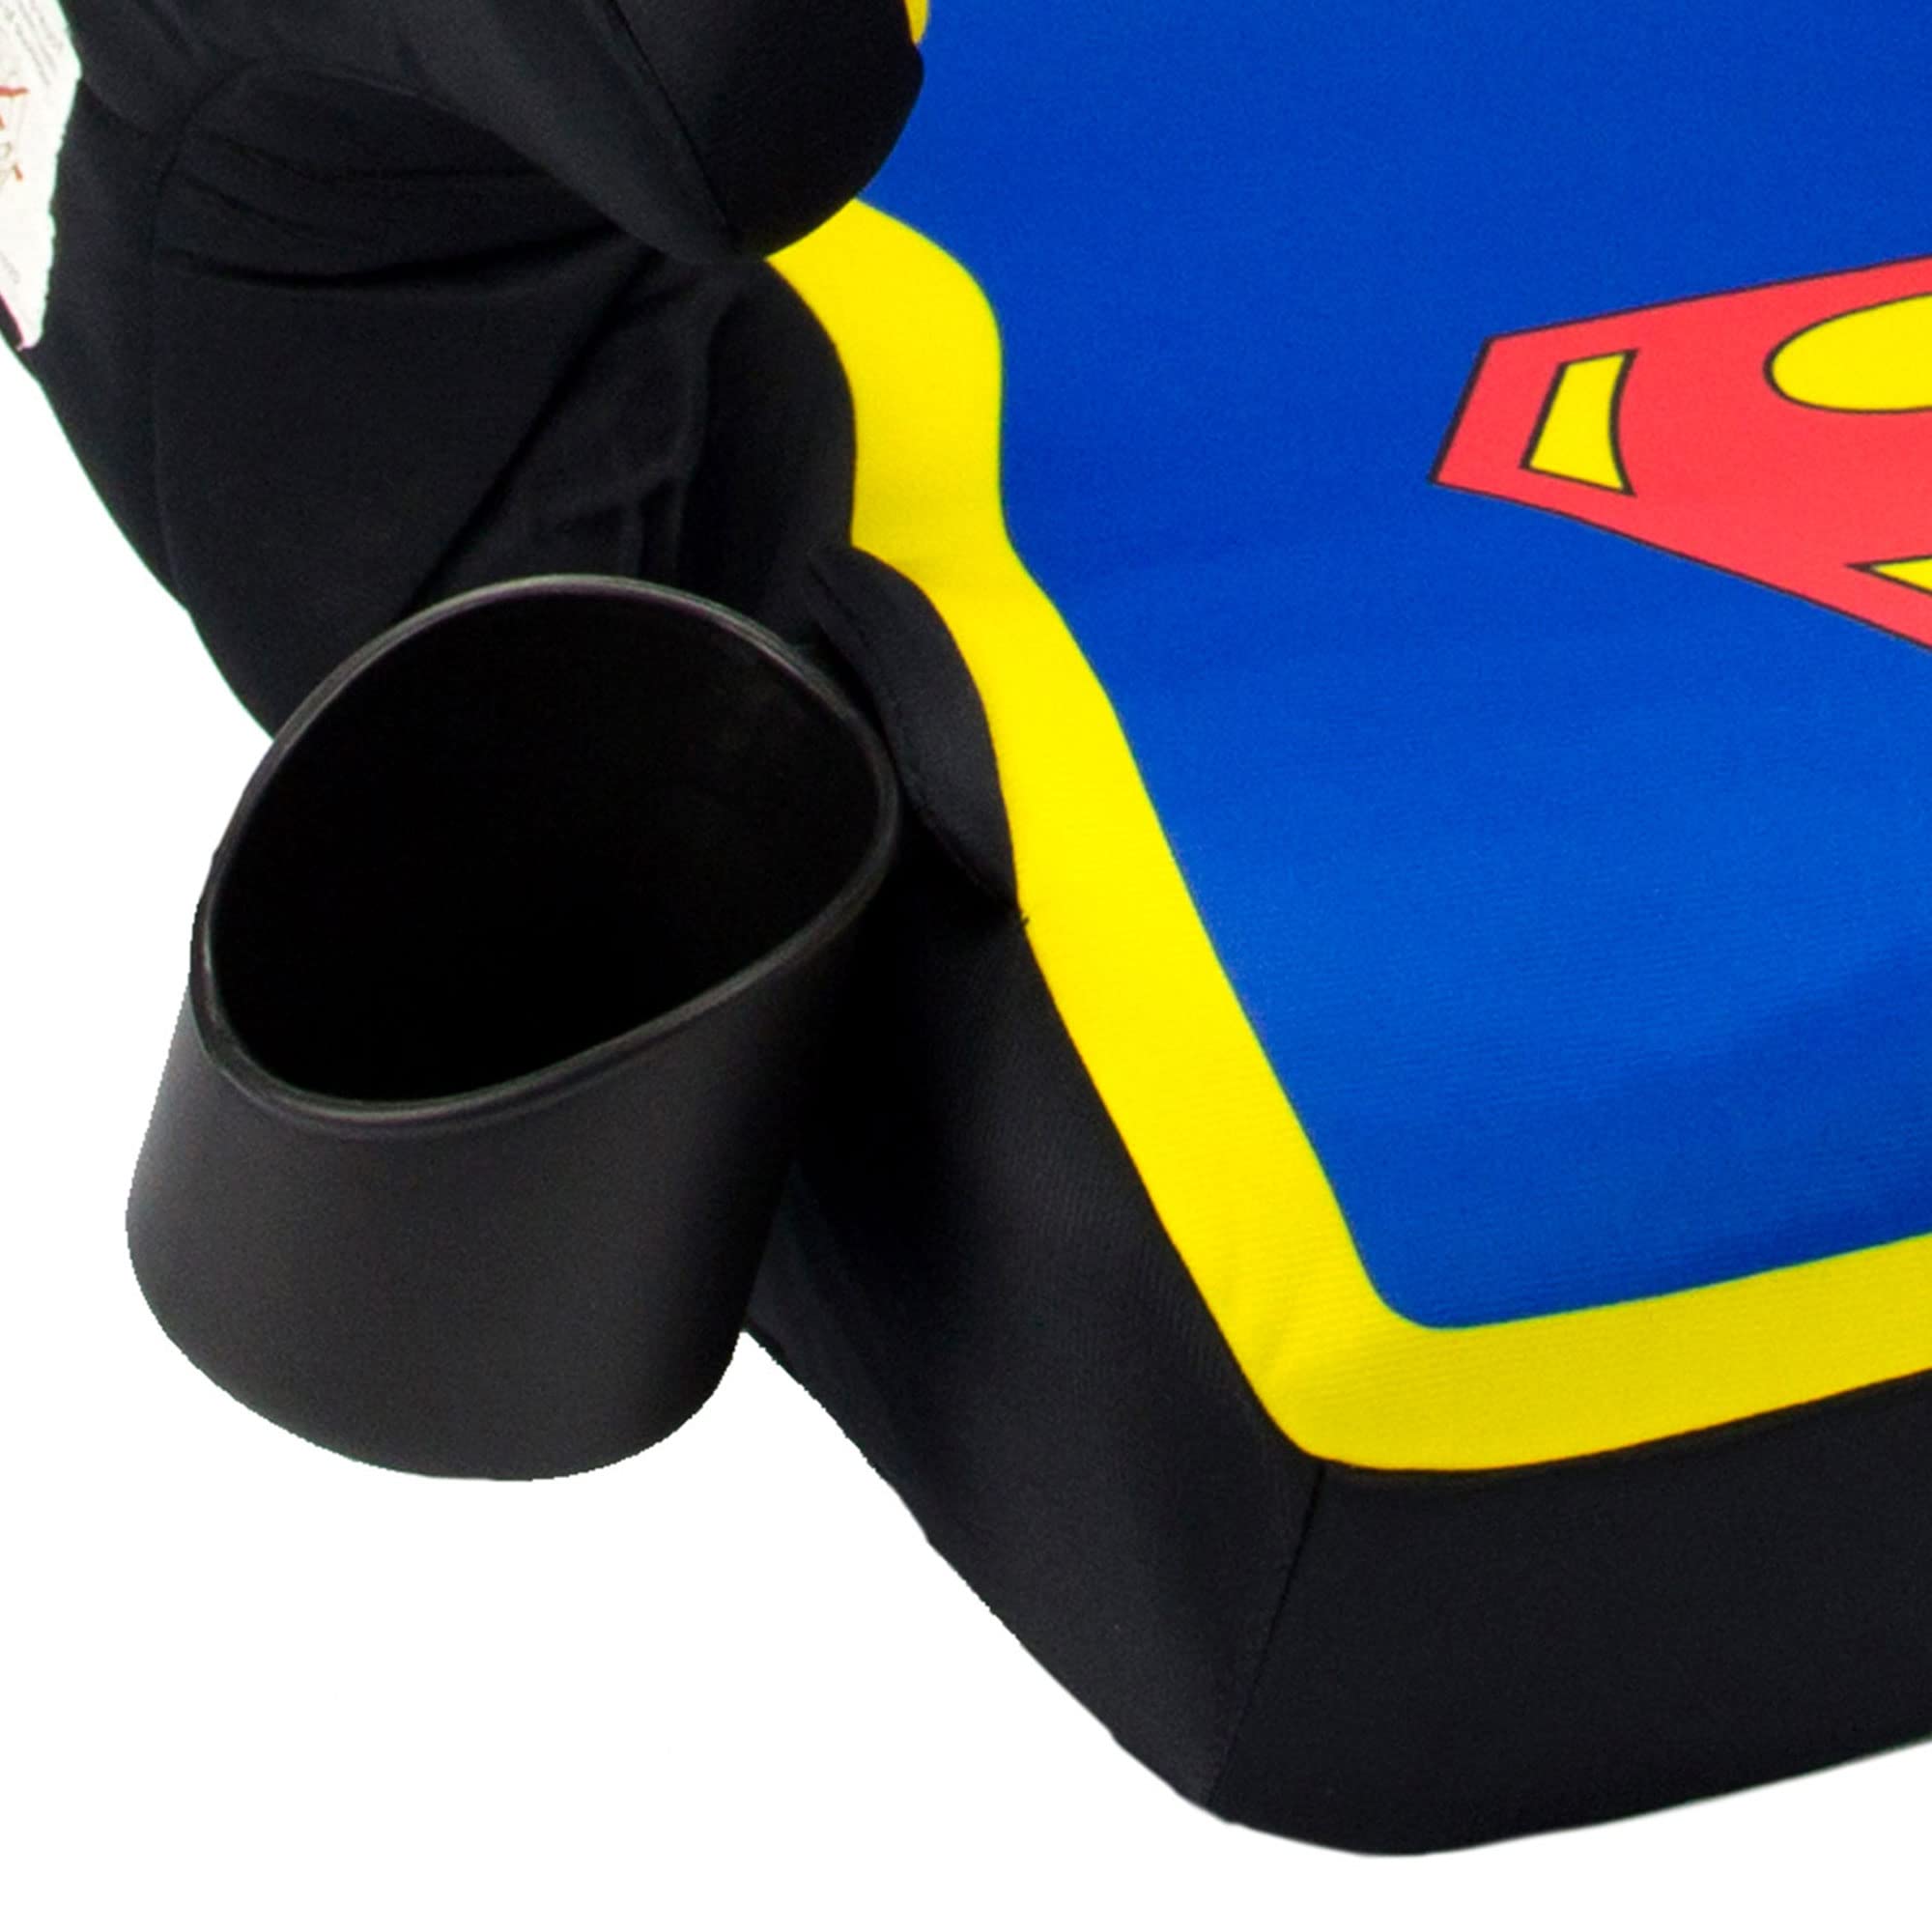 KidsEmbrace Backless Booster Car Seat, DC Comics Superman